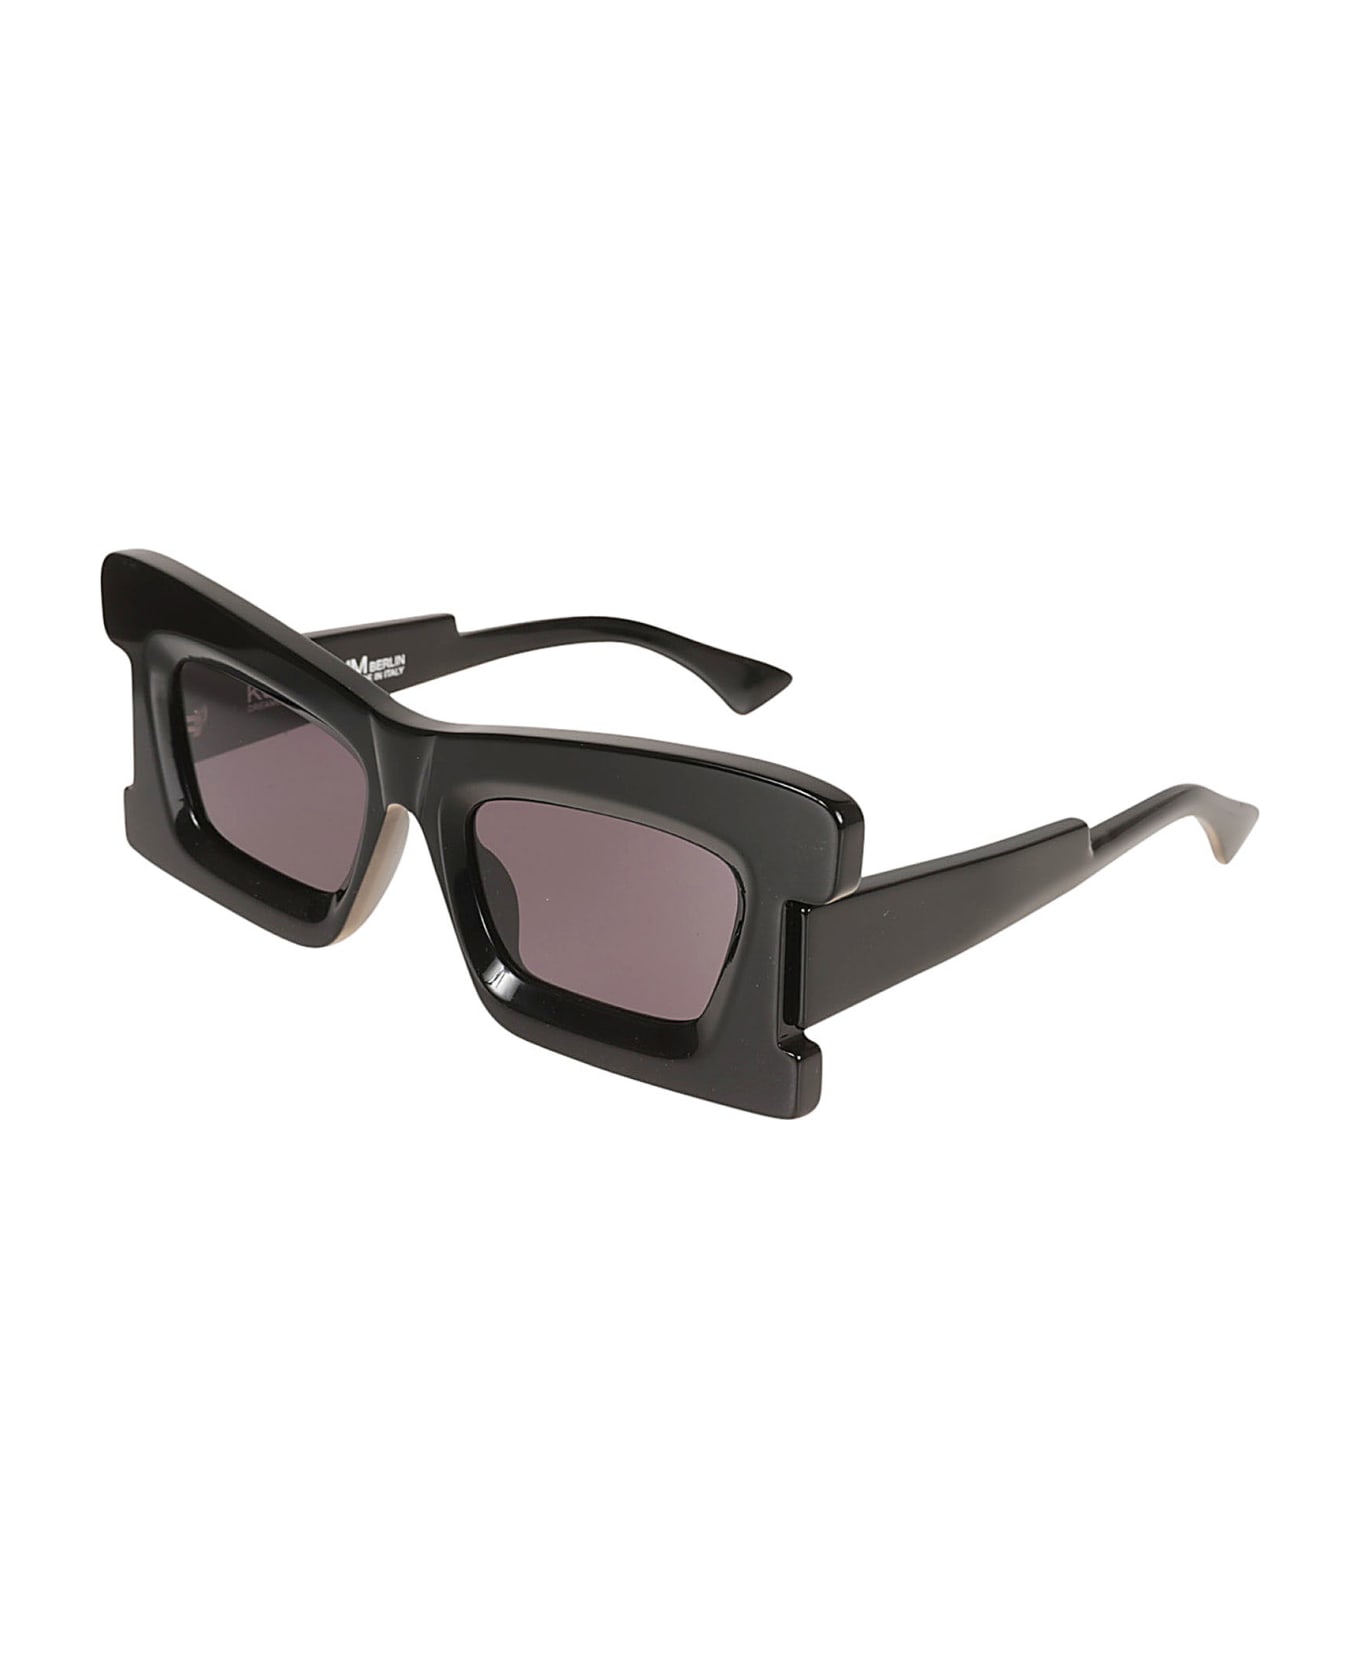 Kuboraum Thick Square Sunglasses Linda - Grey/Black